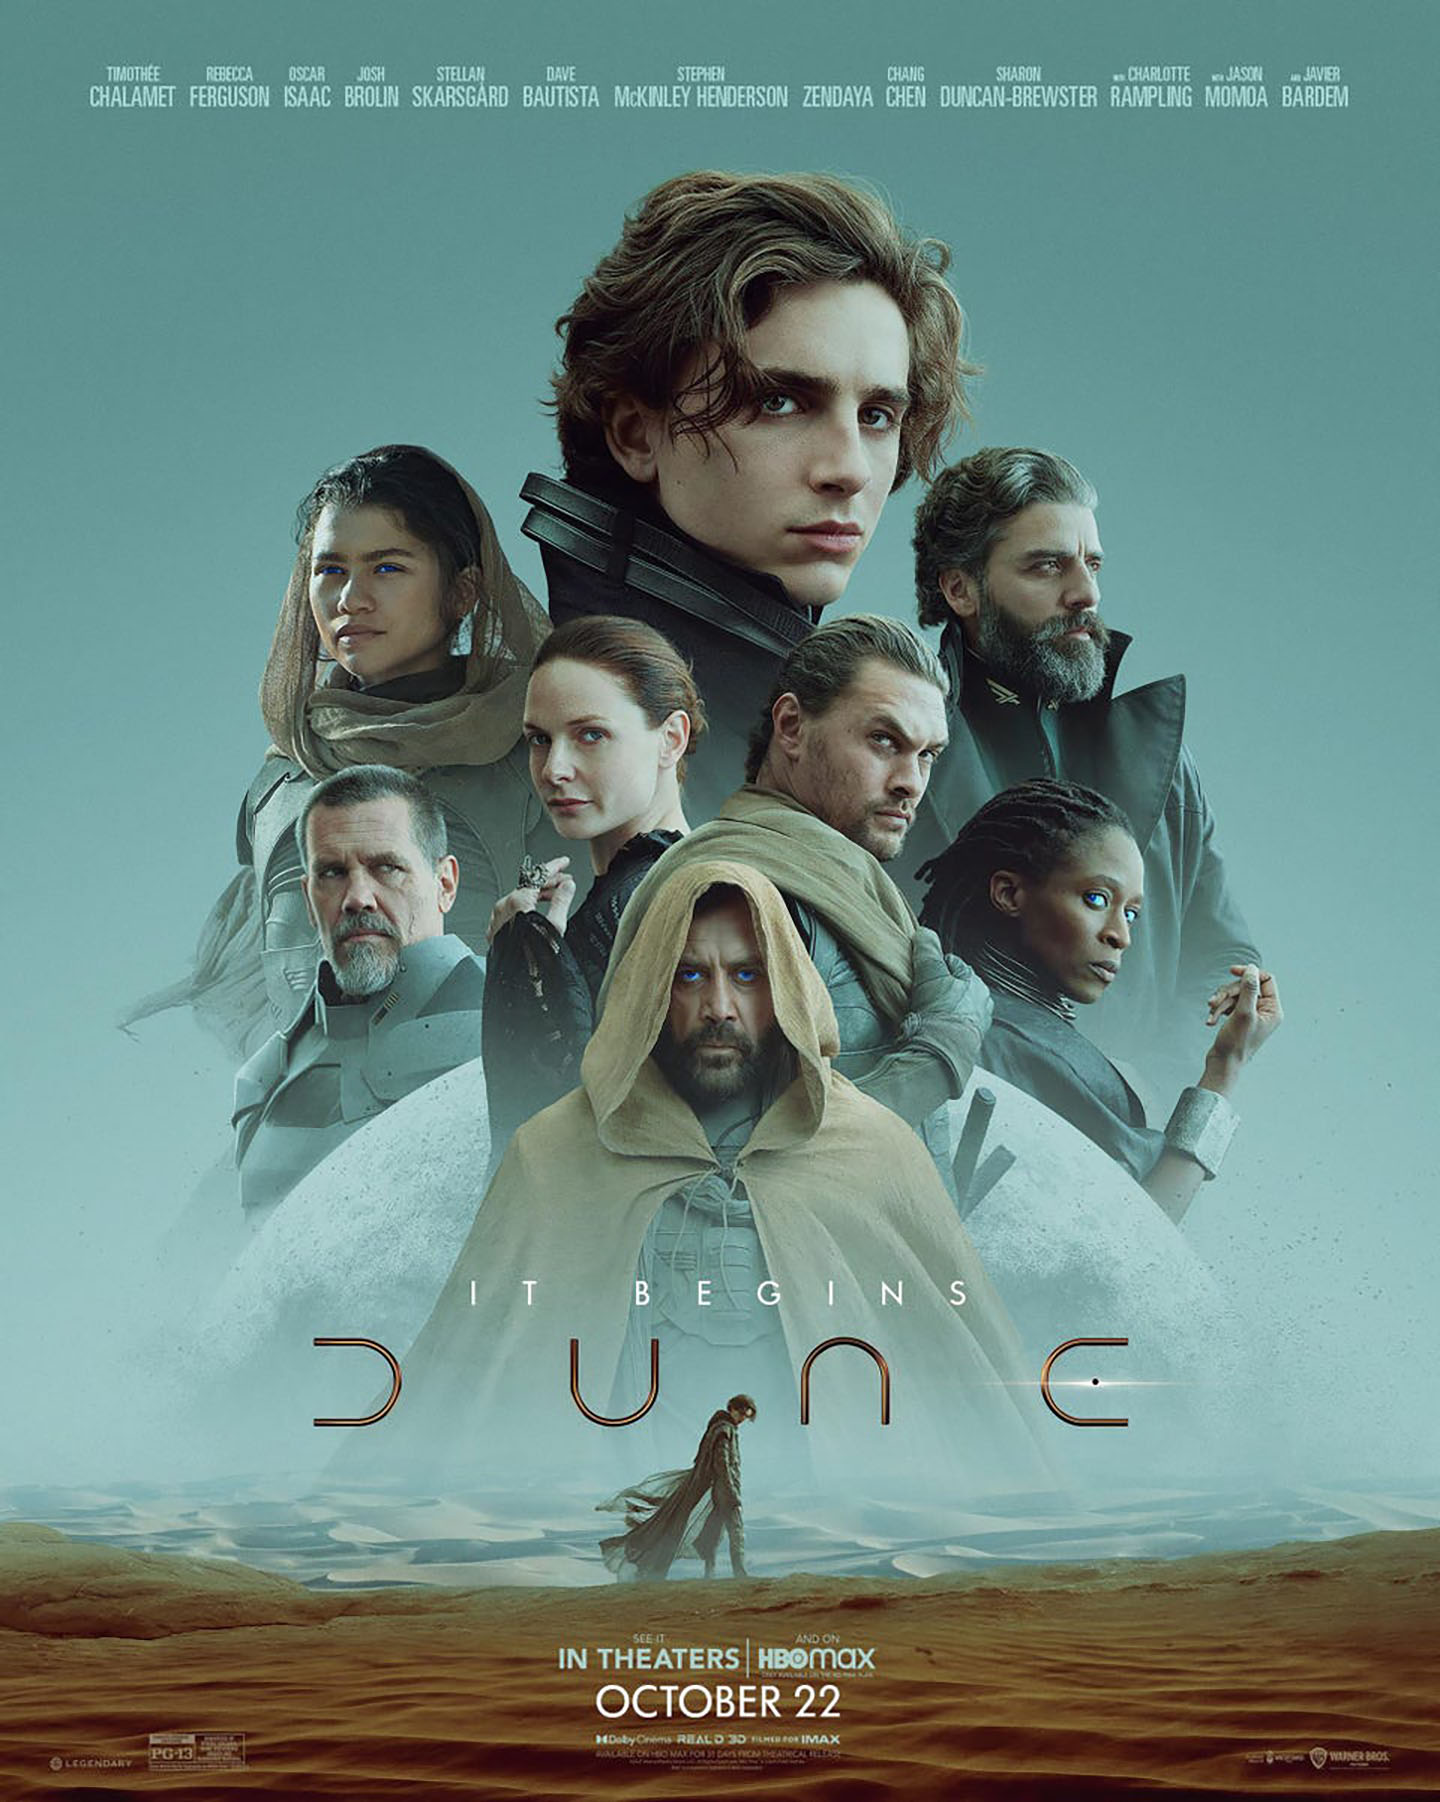 Rachel Review: “Dune,” confusing enough to watch